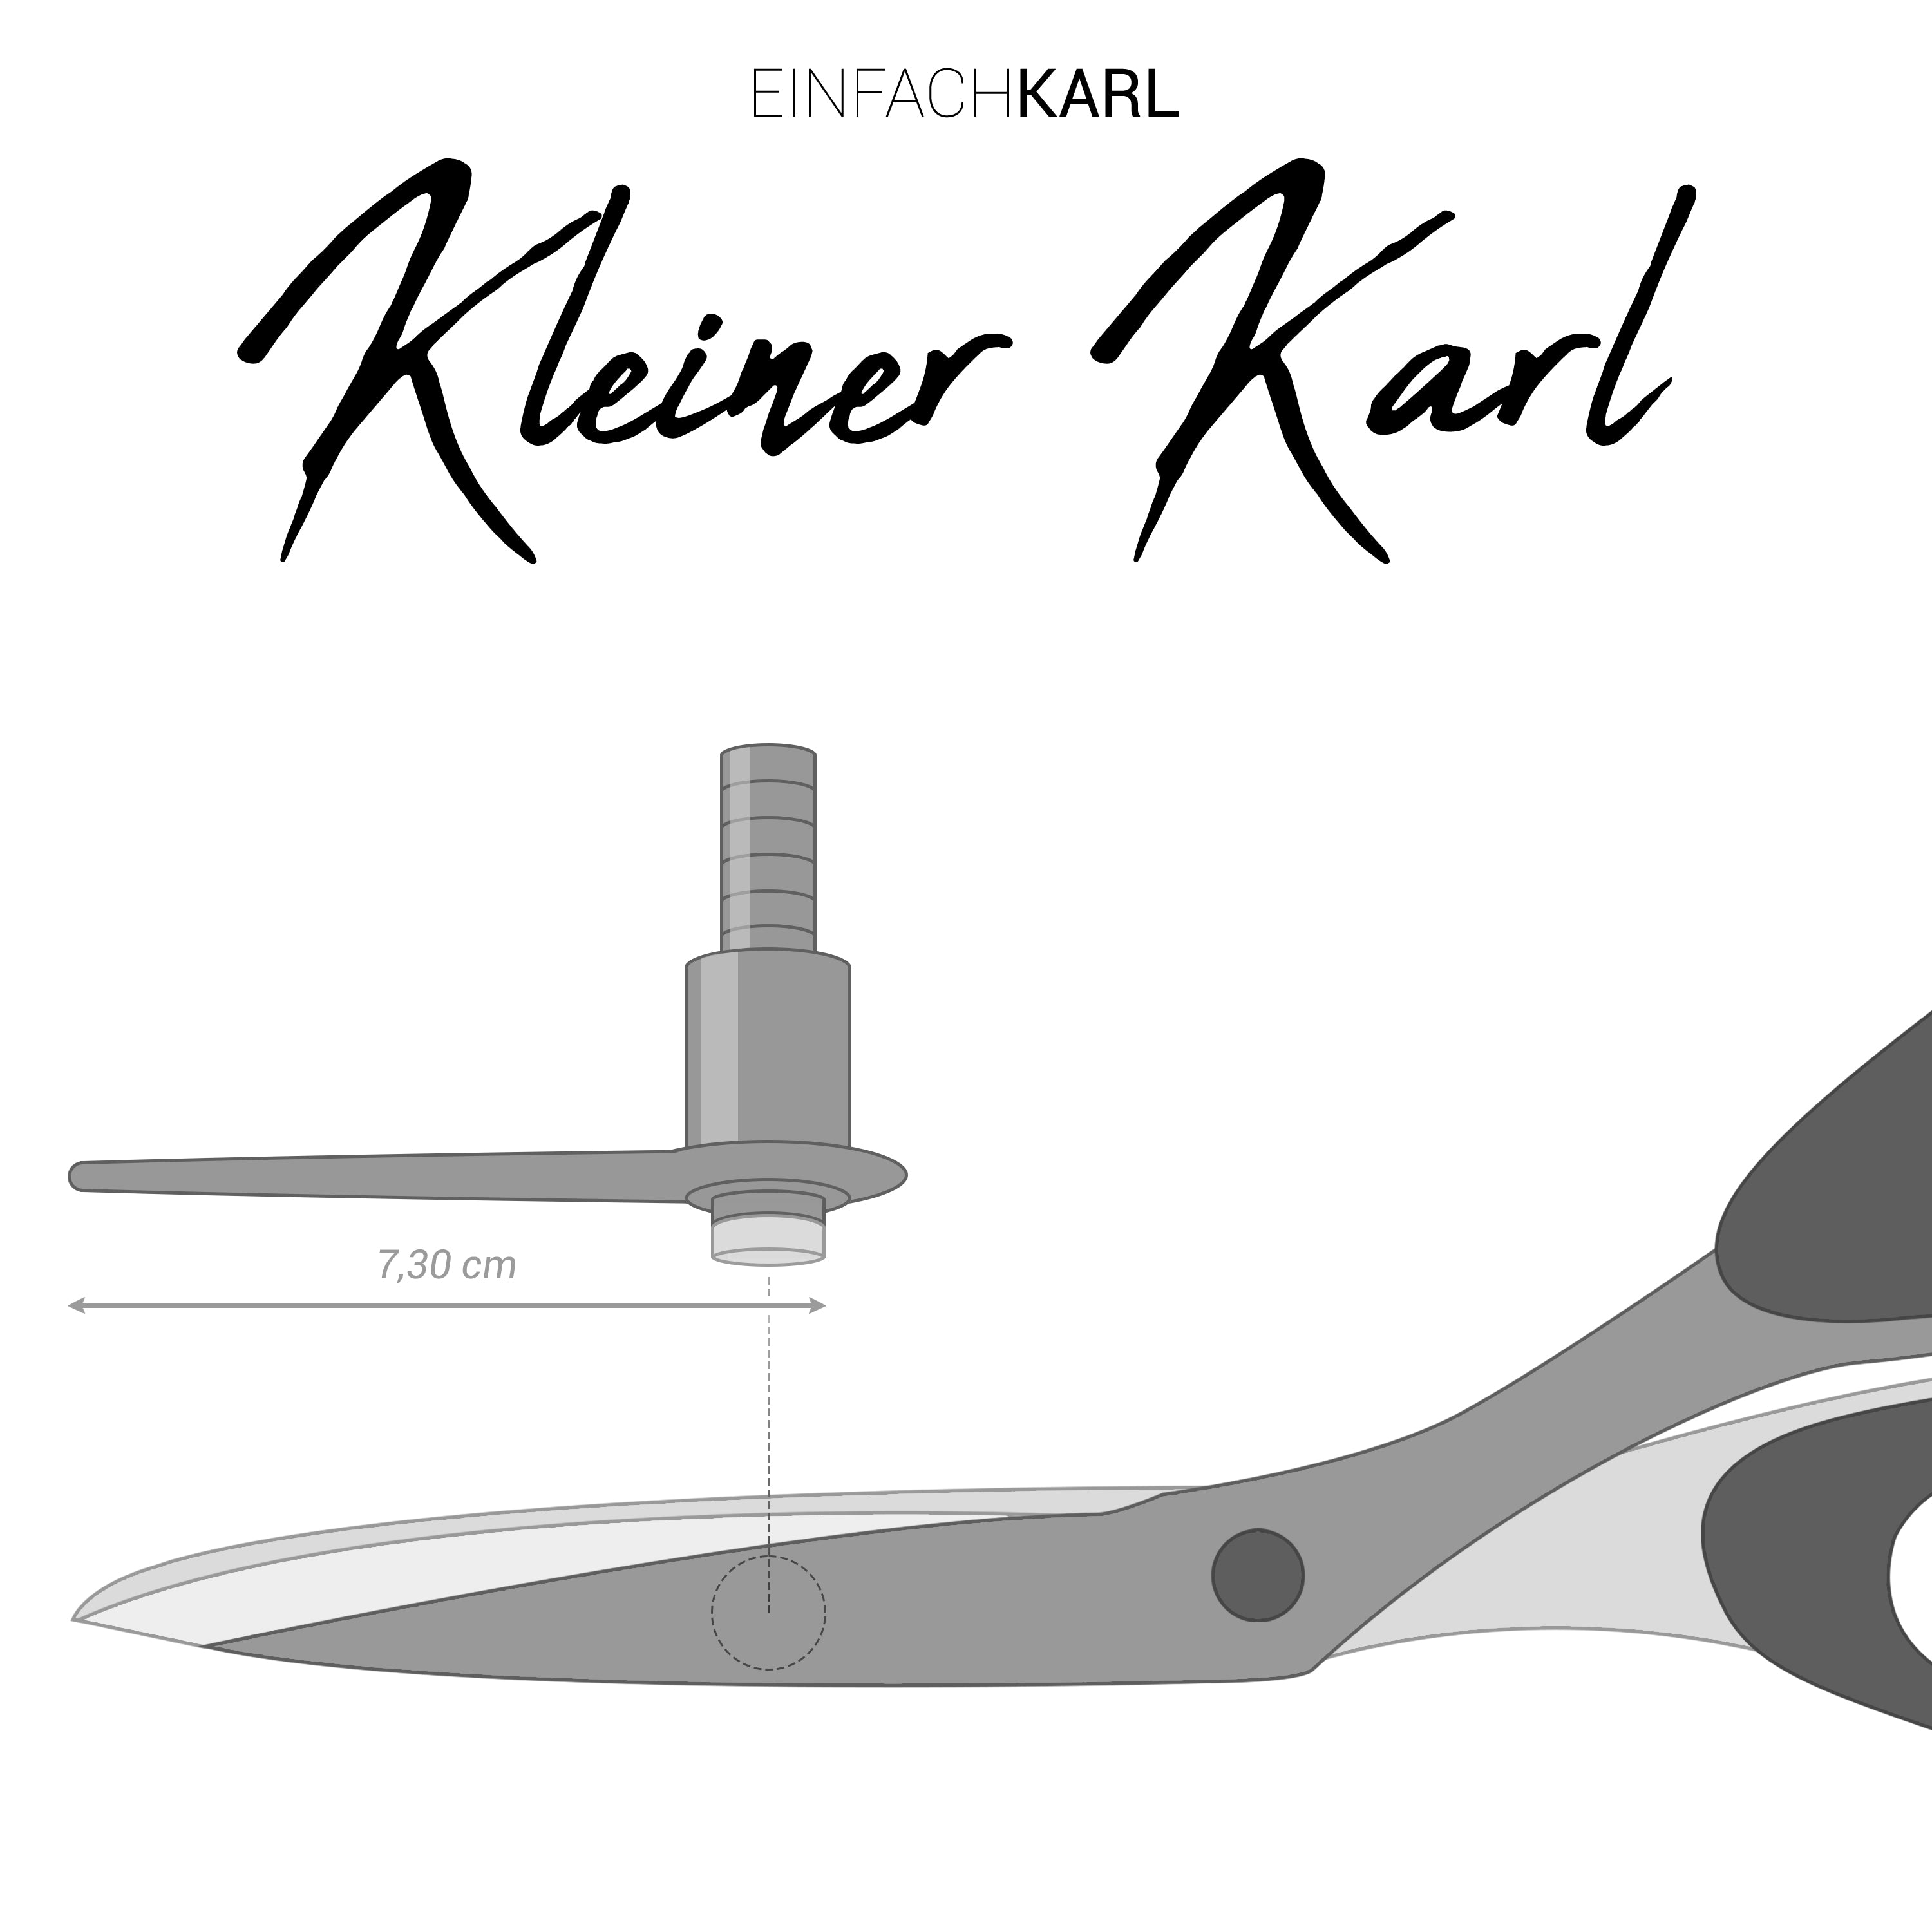 Karl (Silver Edition)